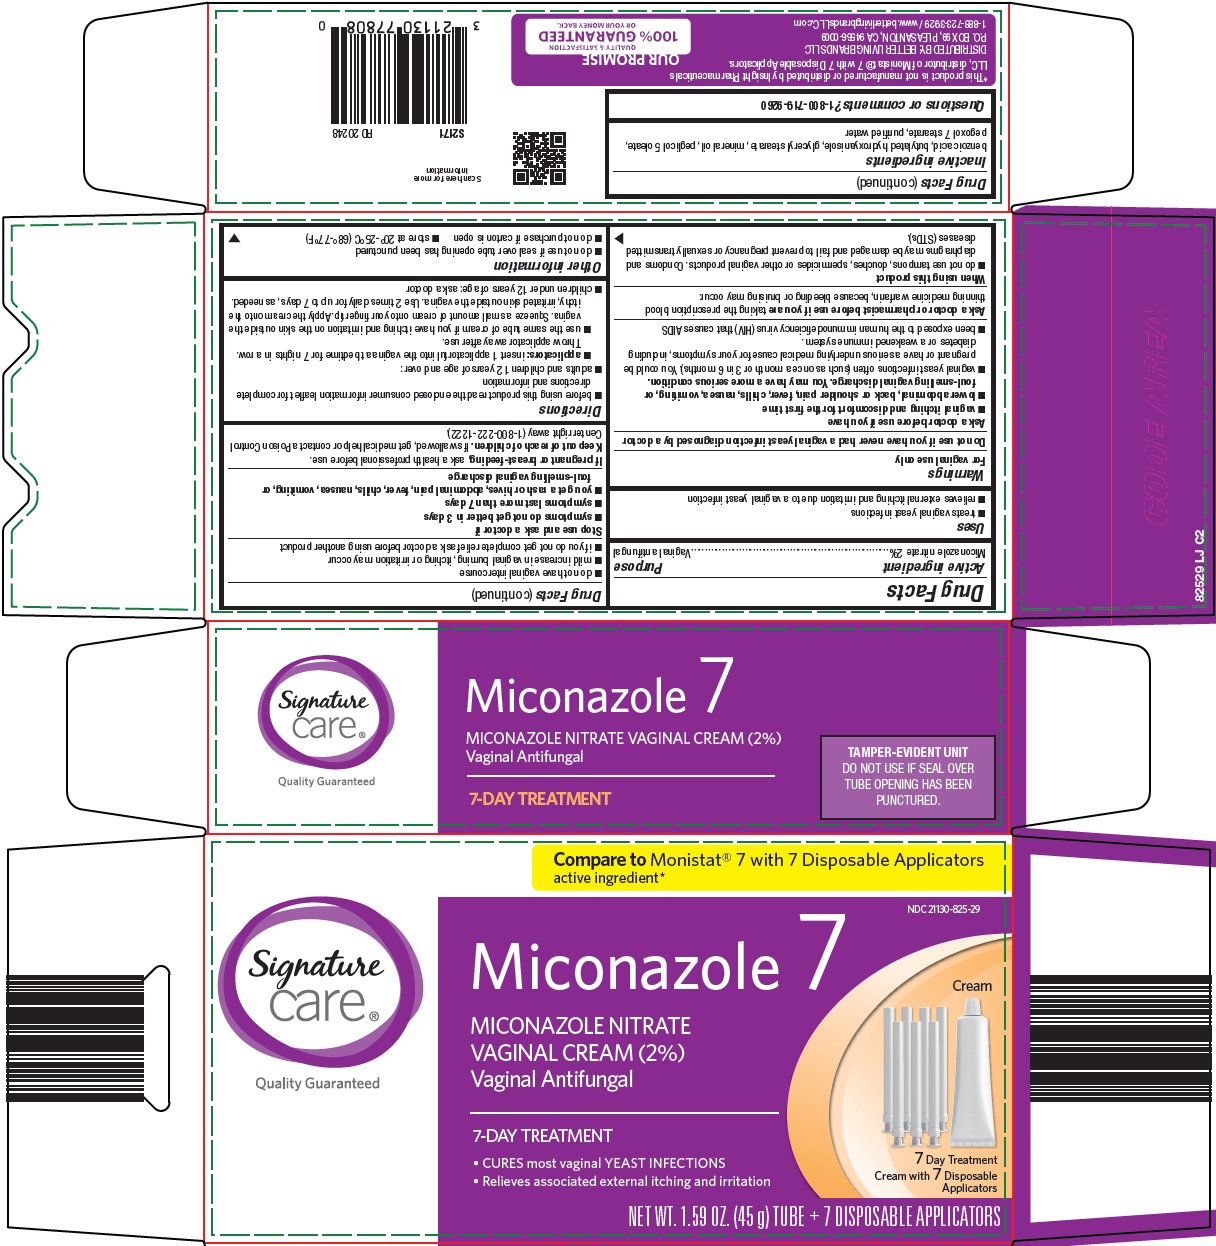 825-lj-miconazole-7